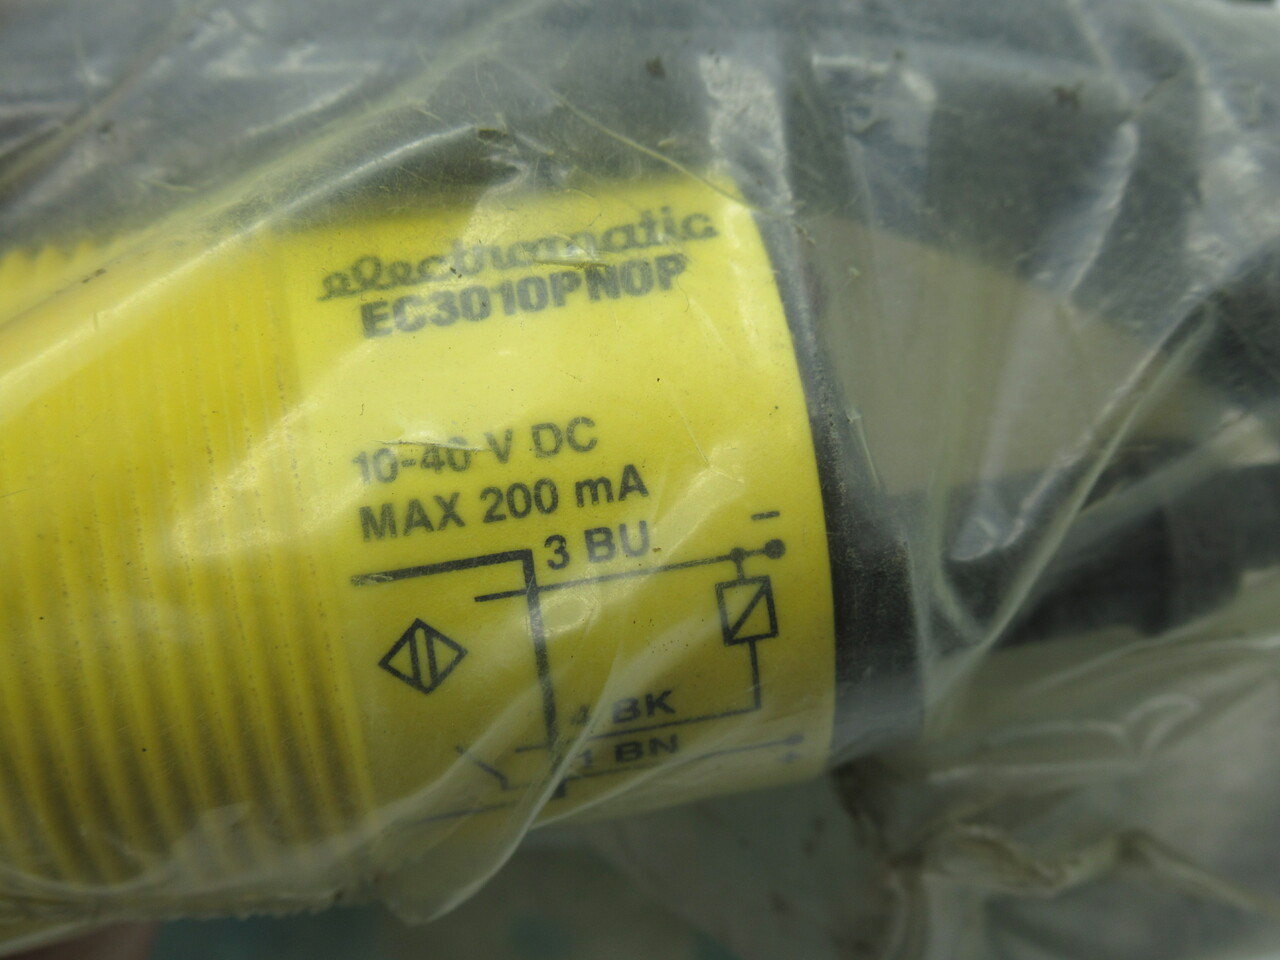 Electromatic EC3010PNOP Proximity Switch 200mA 10-40VDC *Damaged Label* NWB